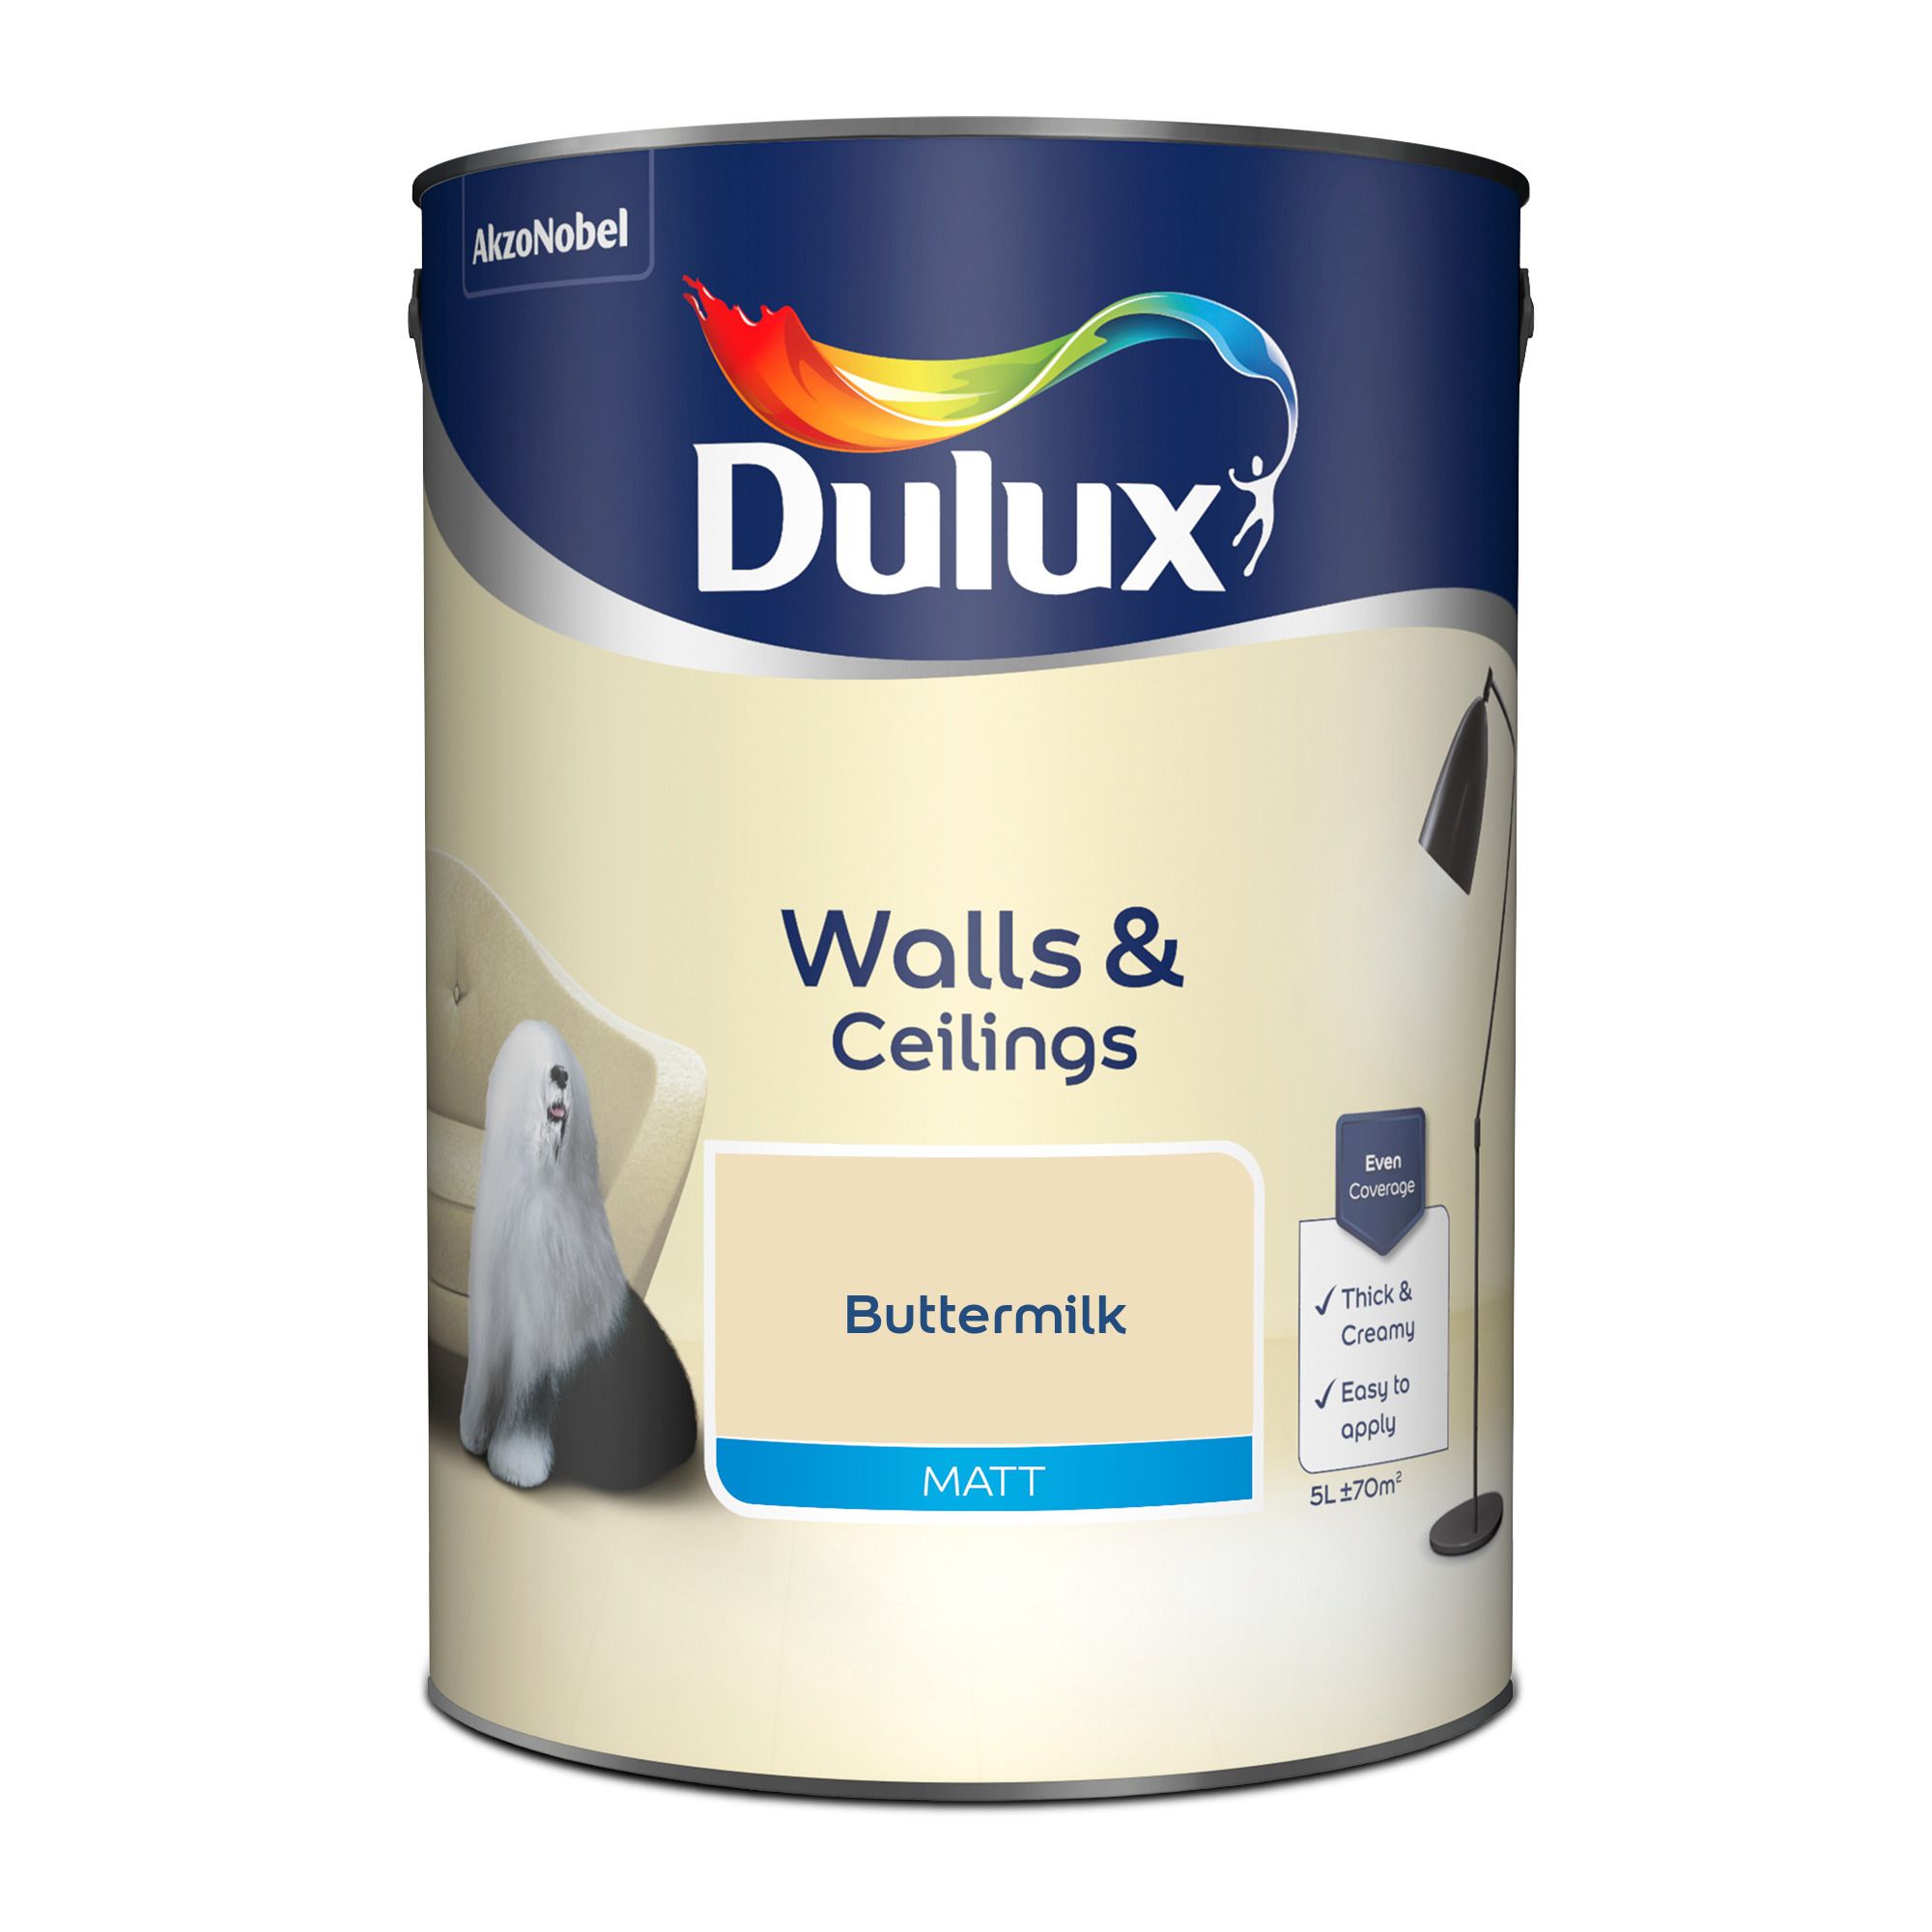 Dulux Walls & ceilings Buttermilk Matt Emulsion paint, 5L